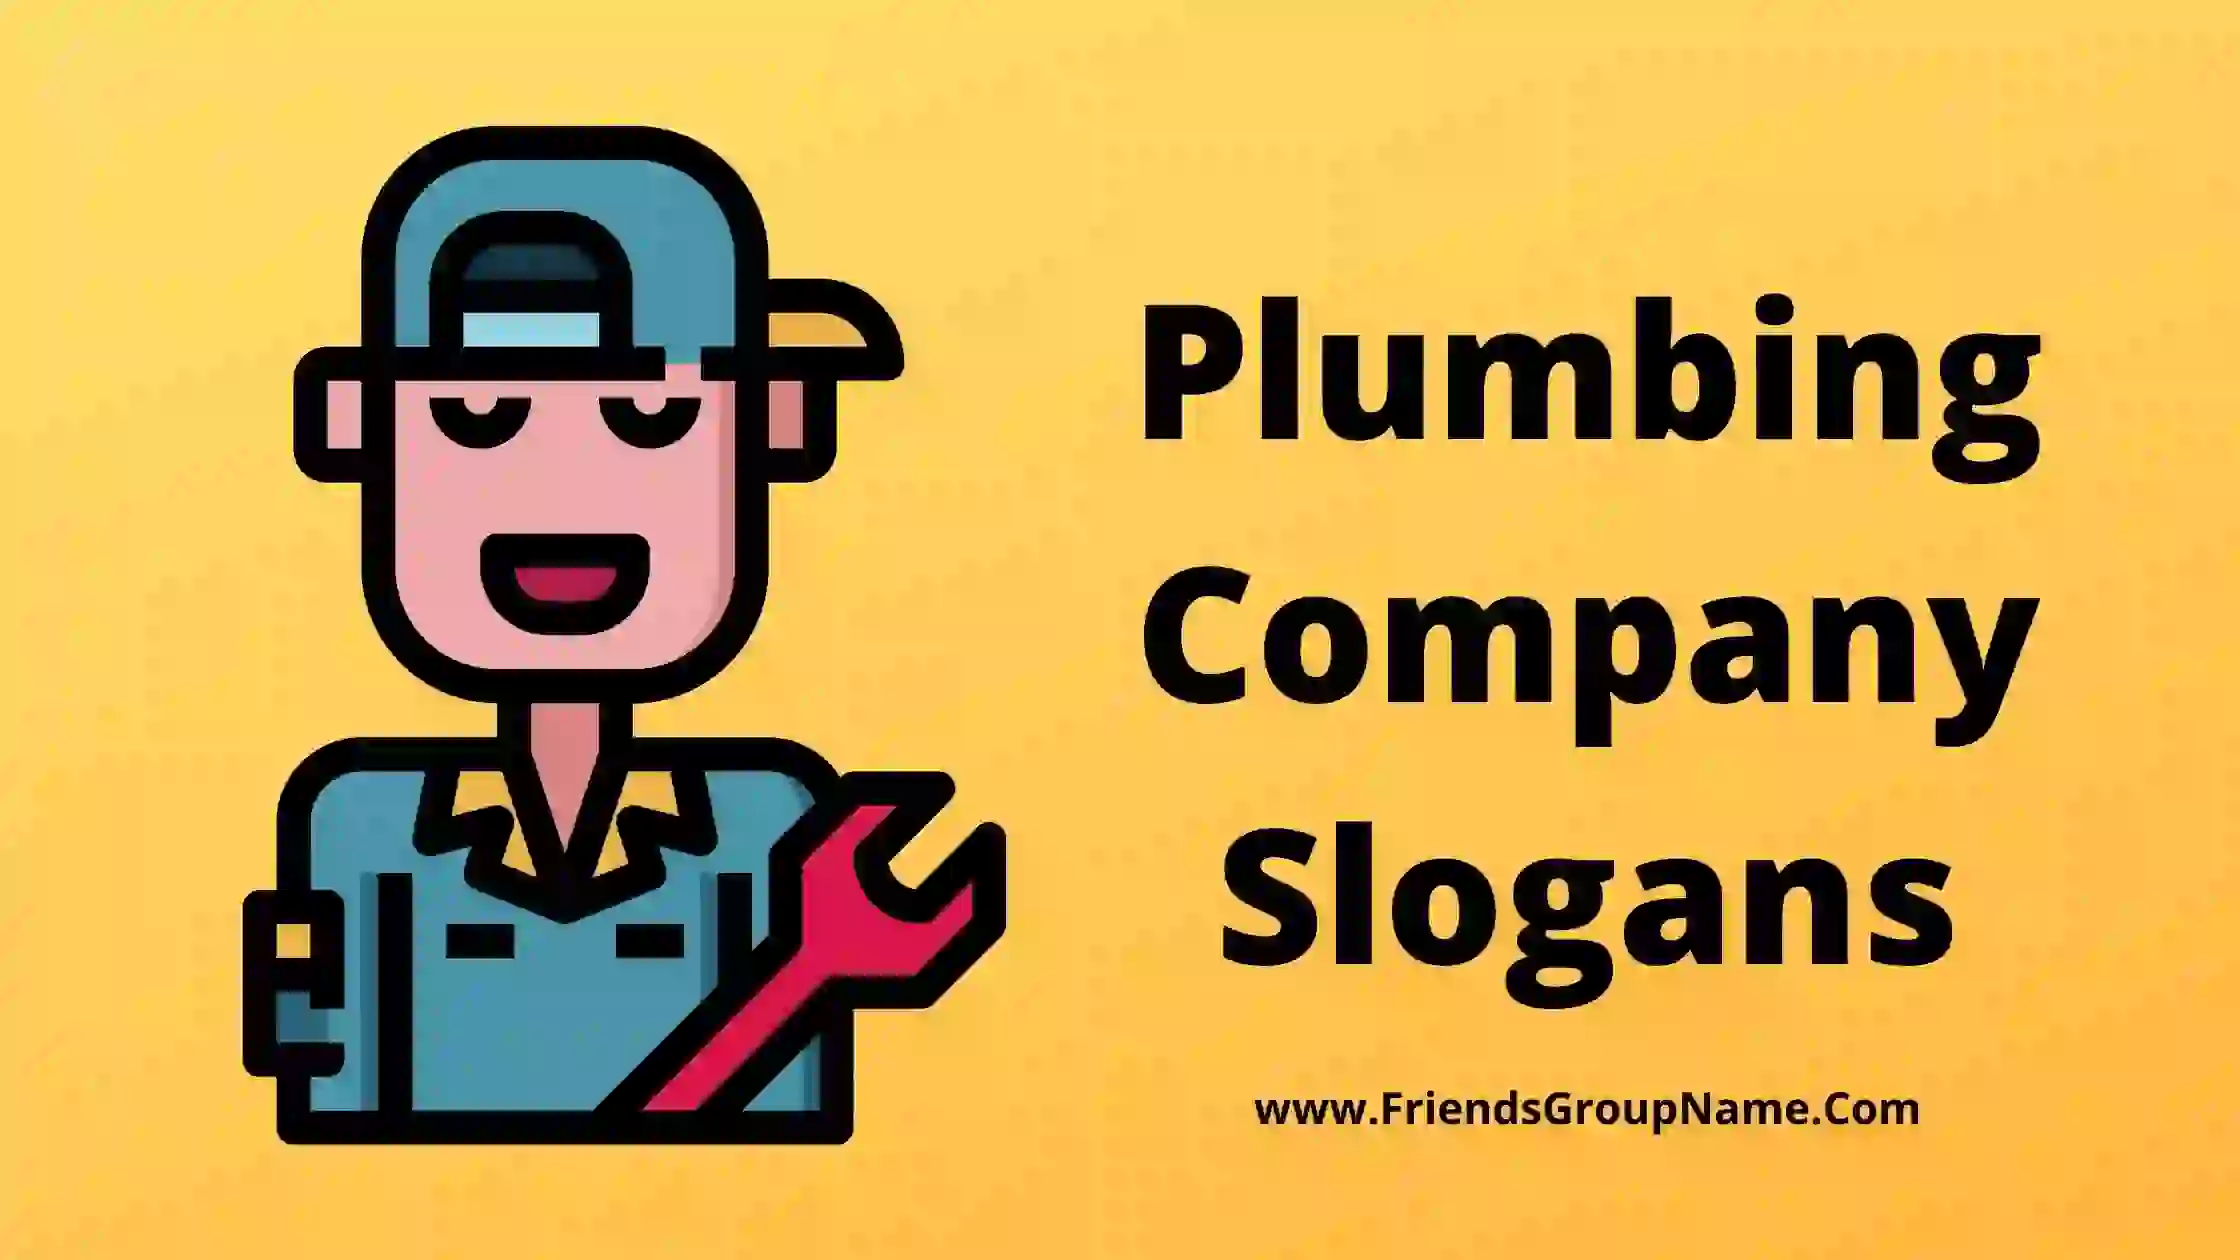 Plumbing Company Slogans